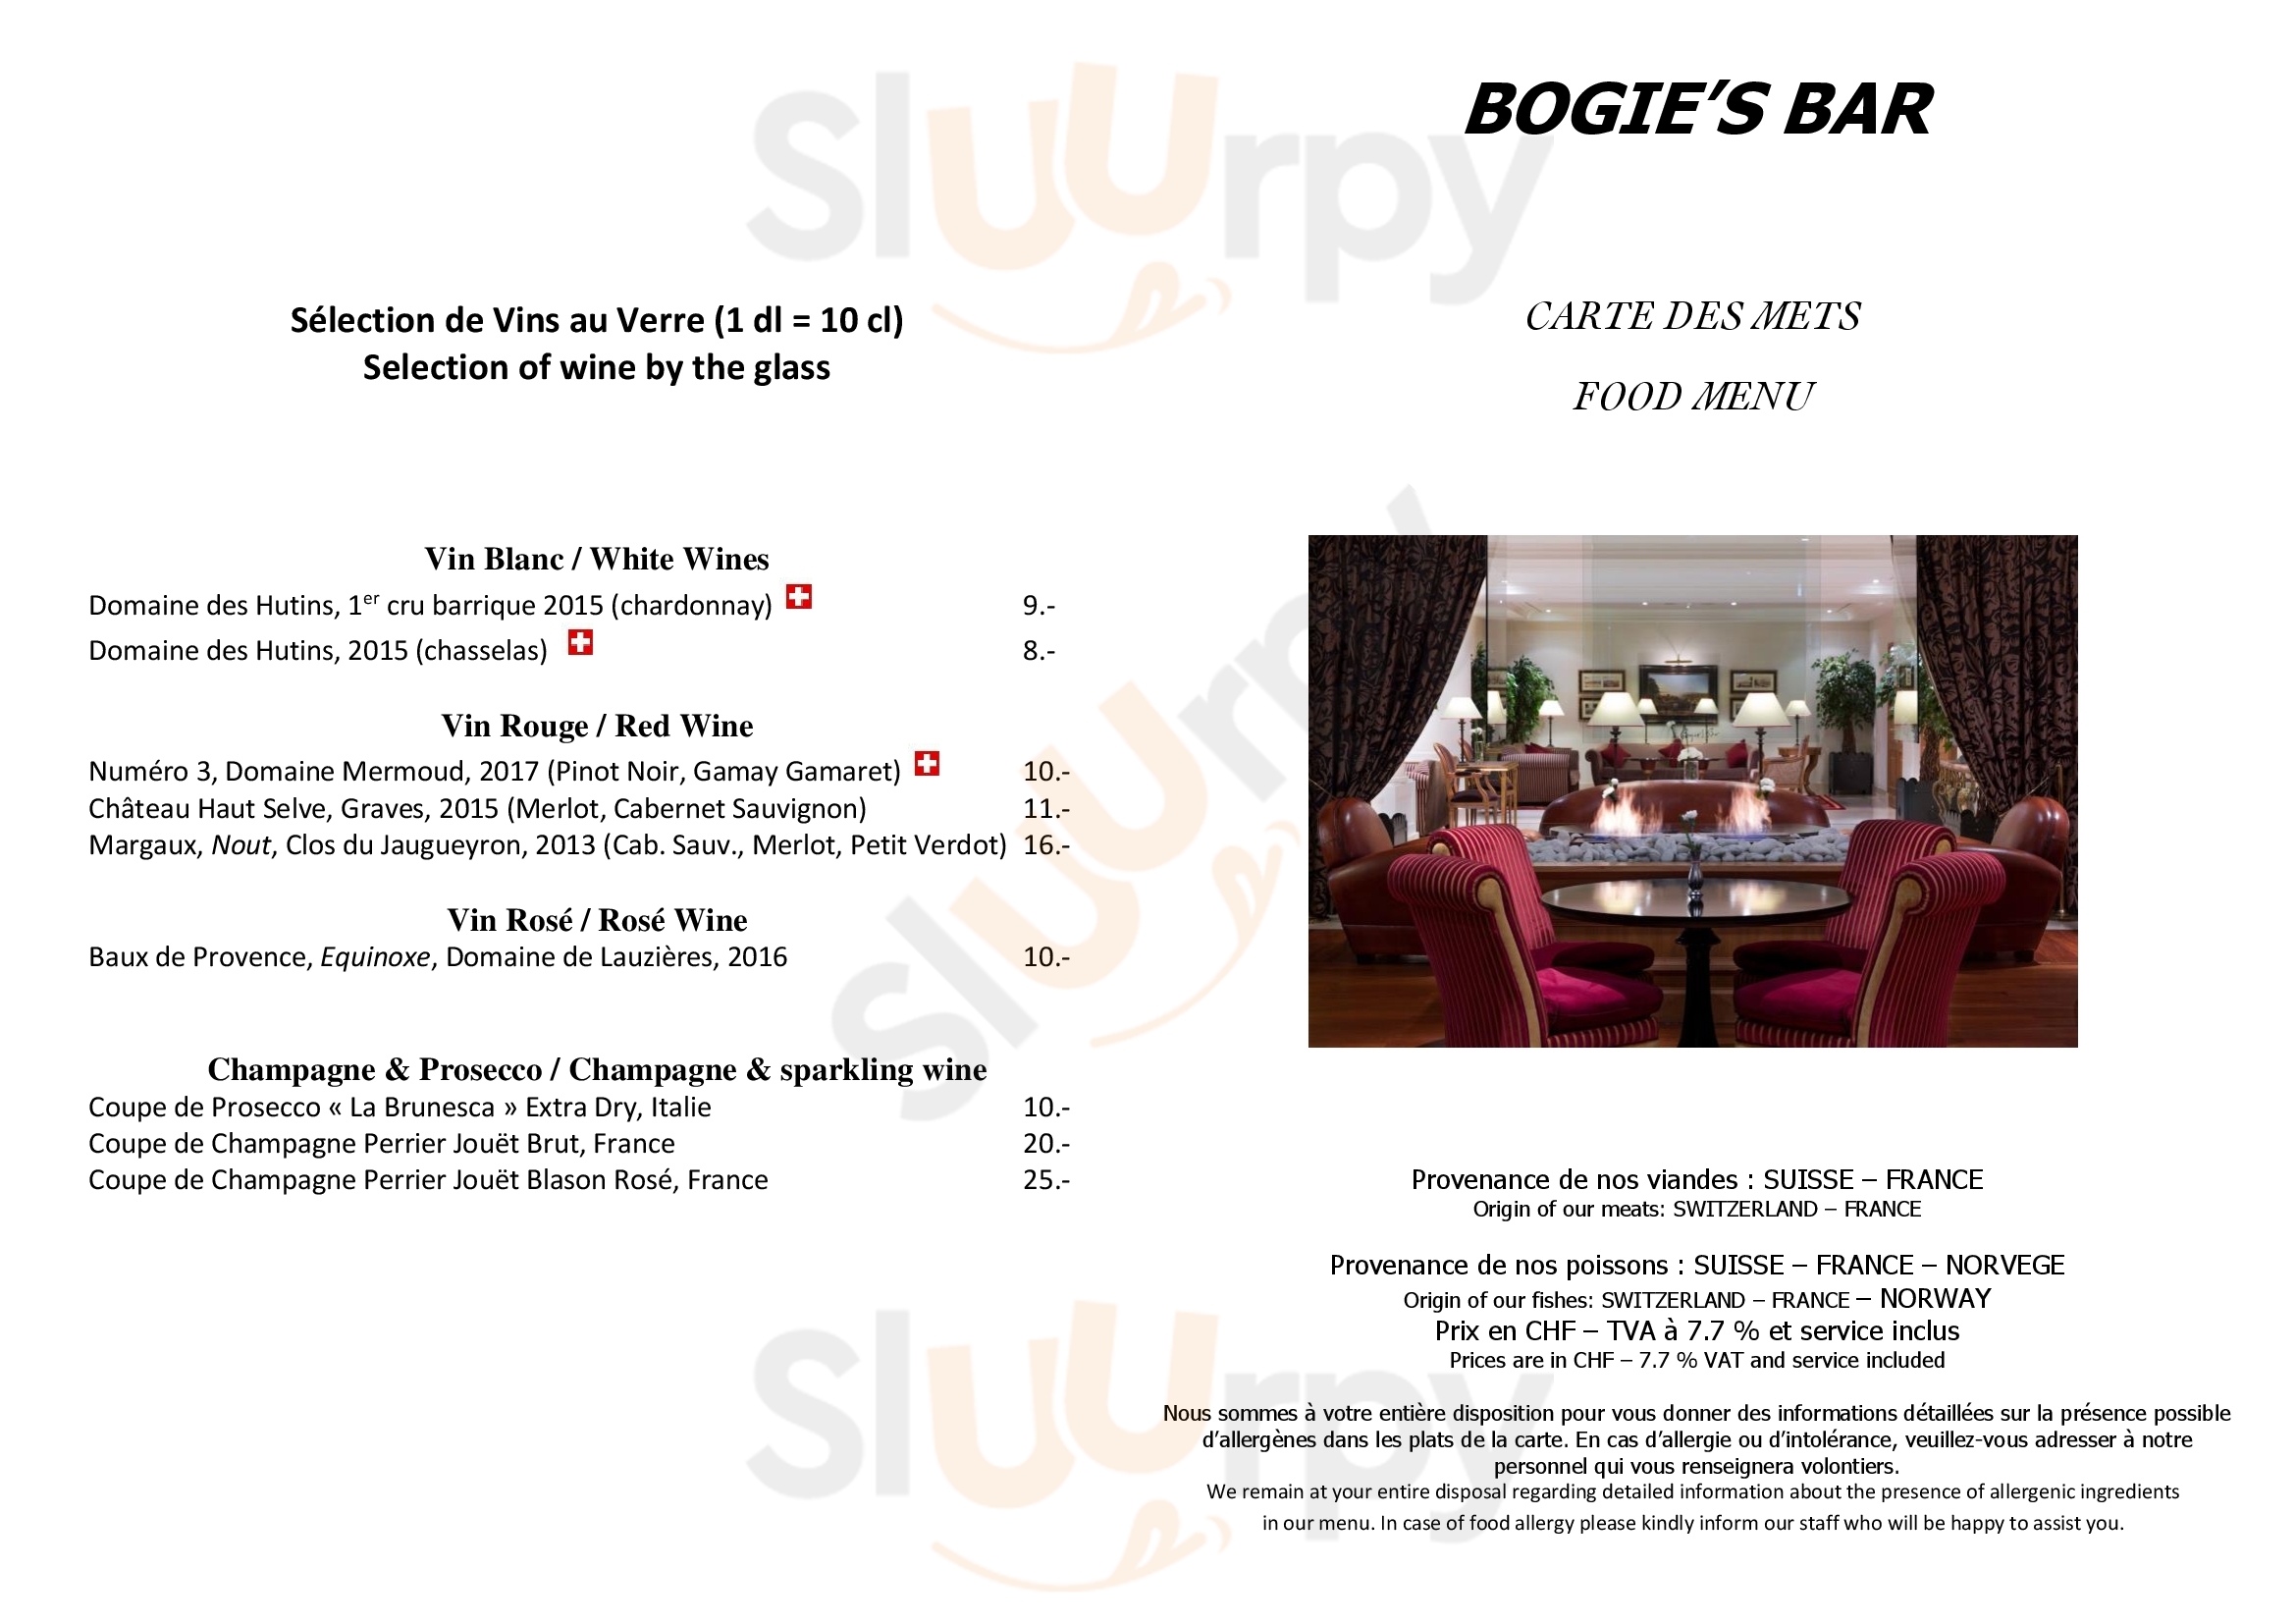 Hotel Royal - Bogie's Bar Genf Menu - 1